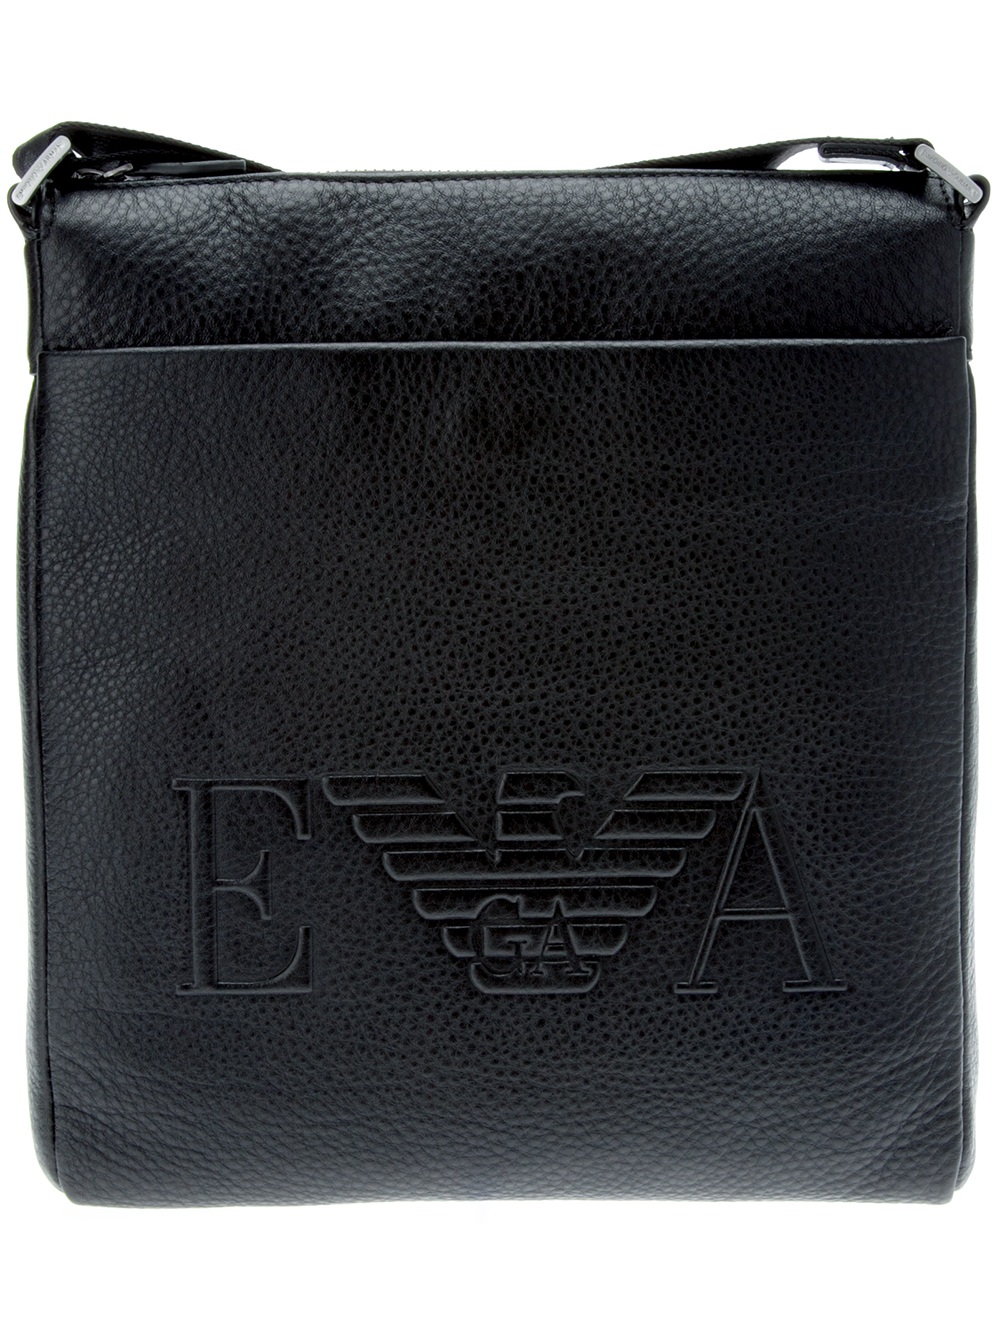 Emporio Armani Messenger Bag in Black for Men - Lyst